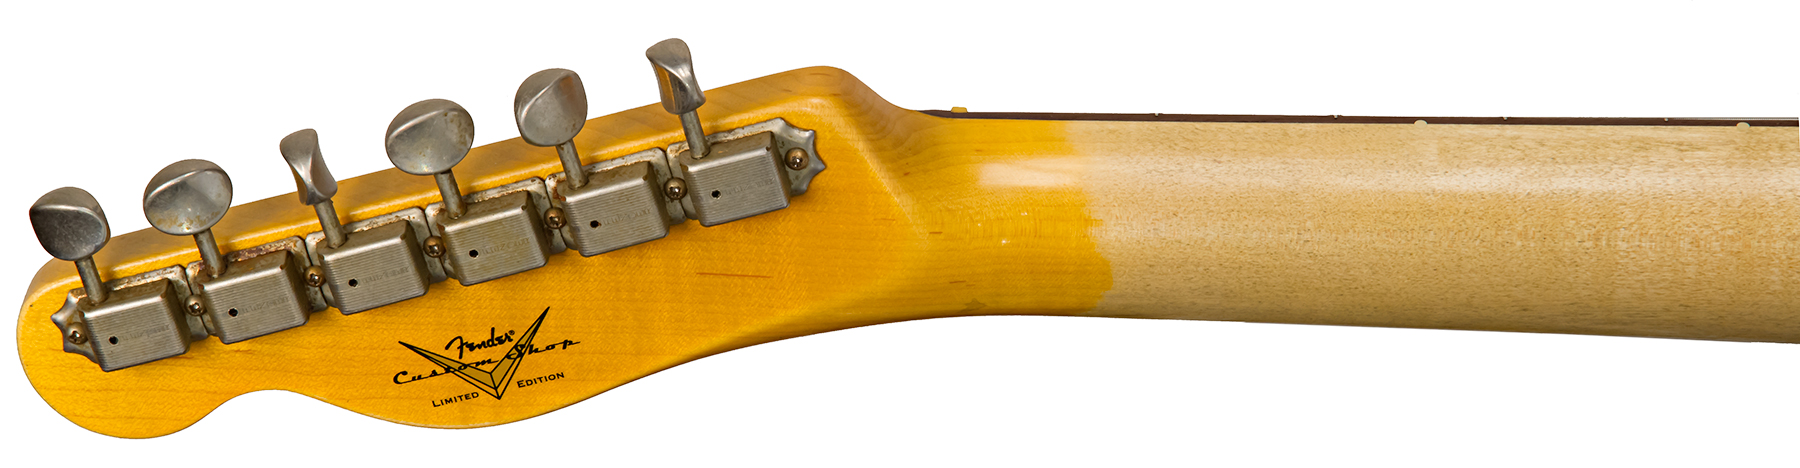 Fender Custom Shop Tele 1960 Rw #cz549121 - Journeyman Relic Purple Metallic - Guitarra eléctrica con forma de tel - Variation 5